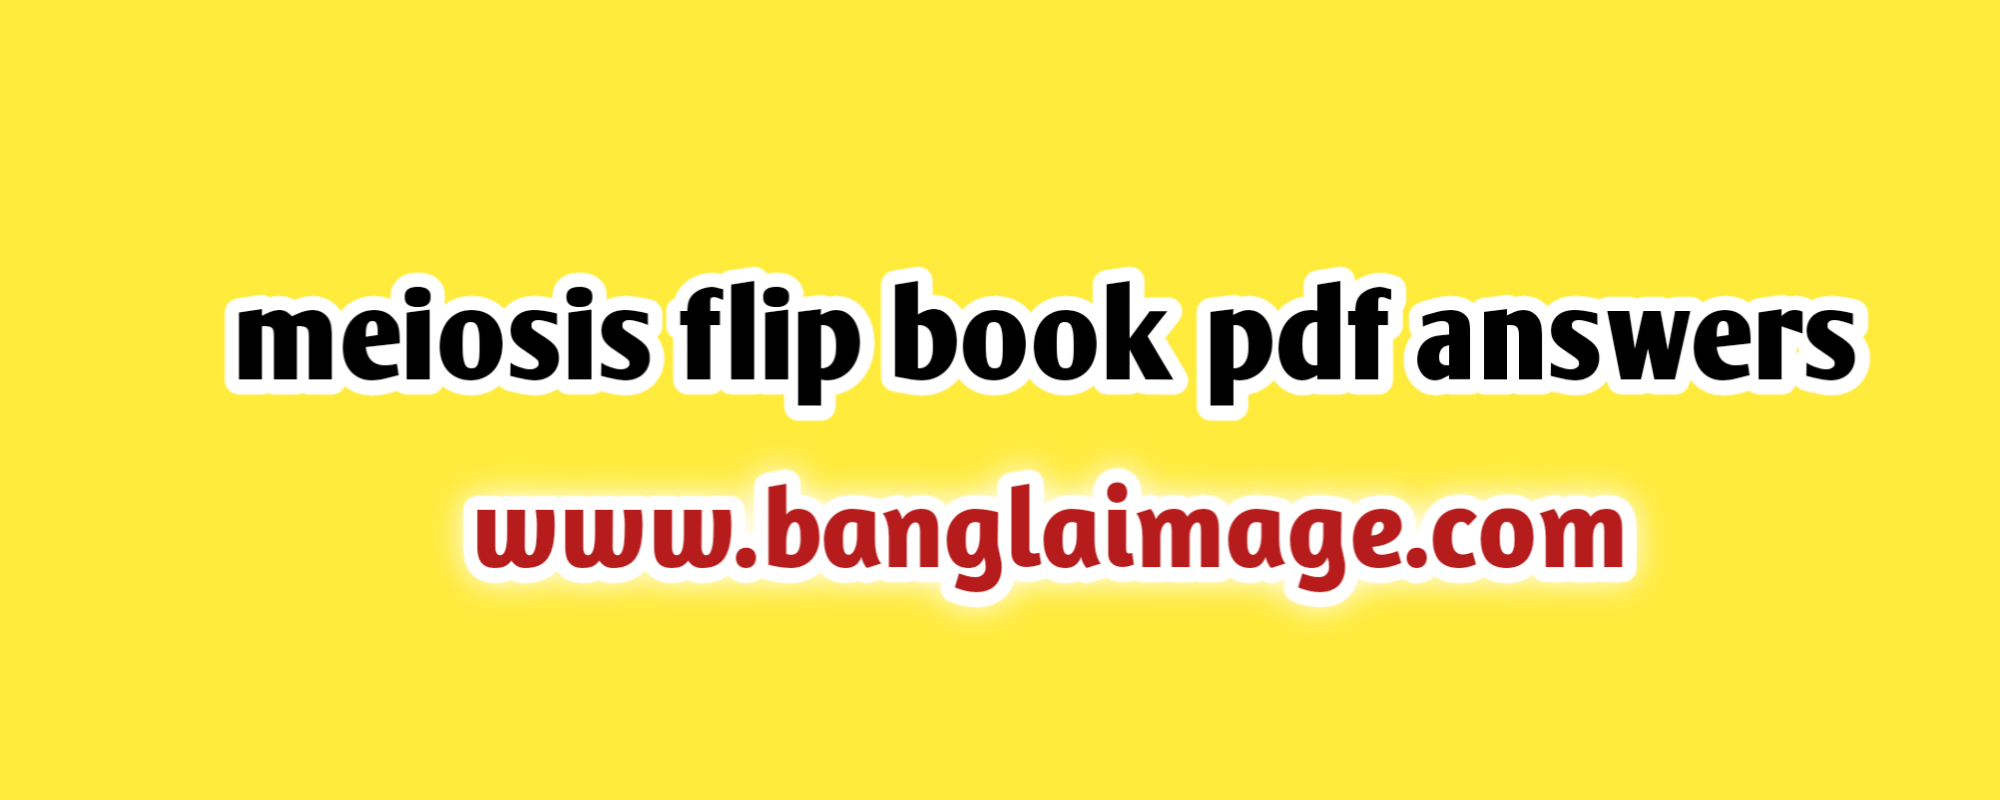 meiosis flip book pdf answers, meiosis flip book pdf answers, meiosis flip book template, the meiosis flip book pdf answers